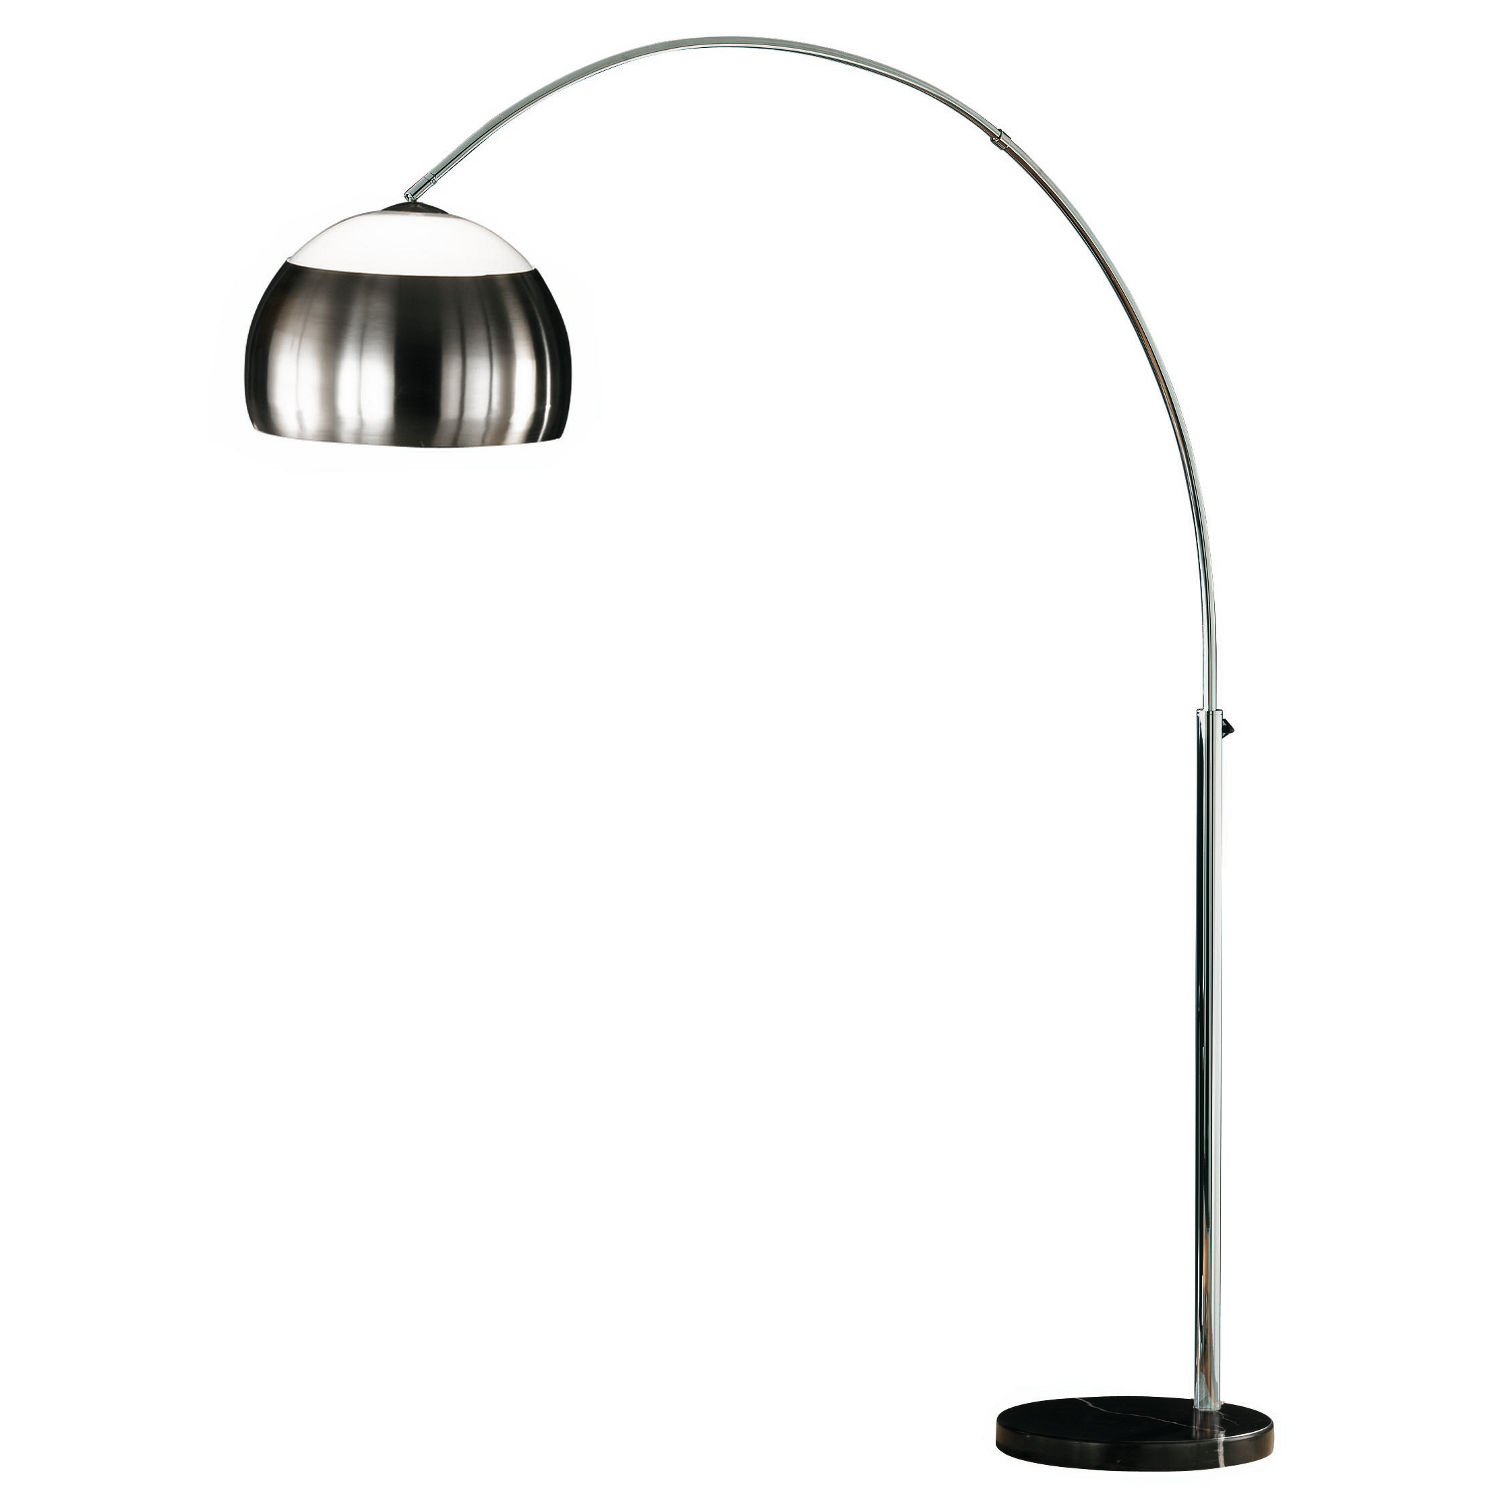 Free standing lamps - 10 tips for buyers - Warisan Lighting